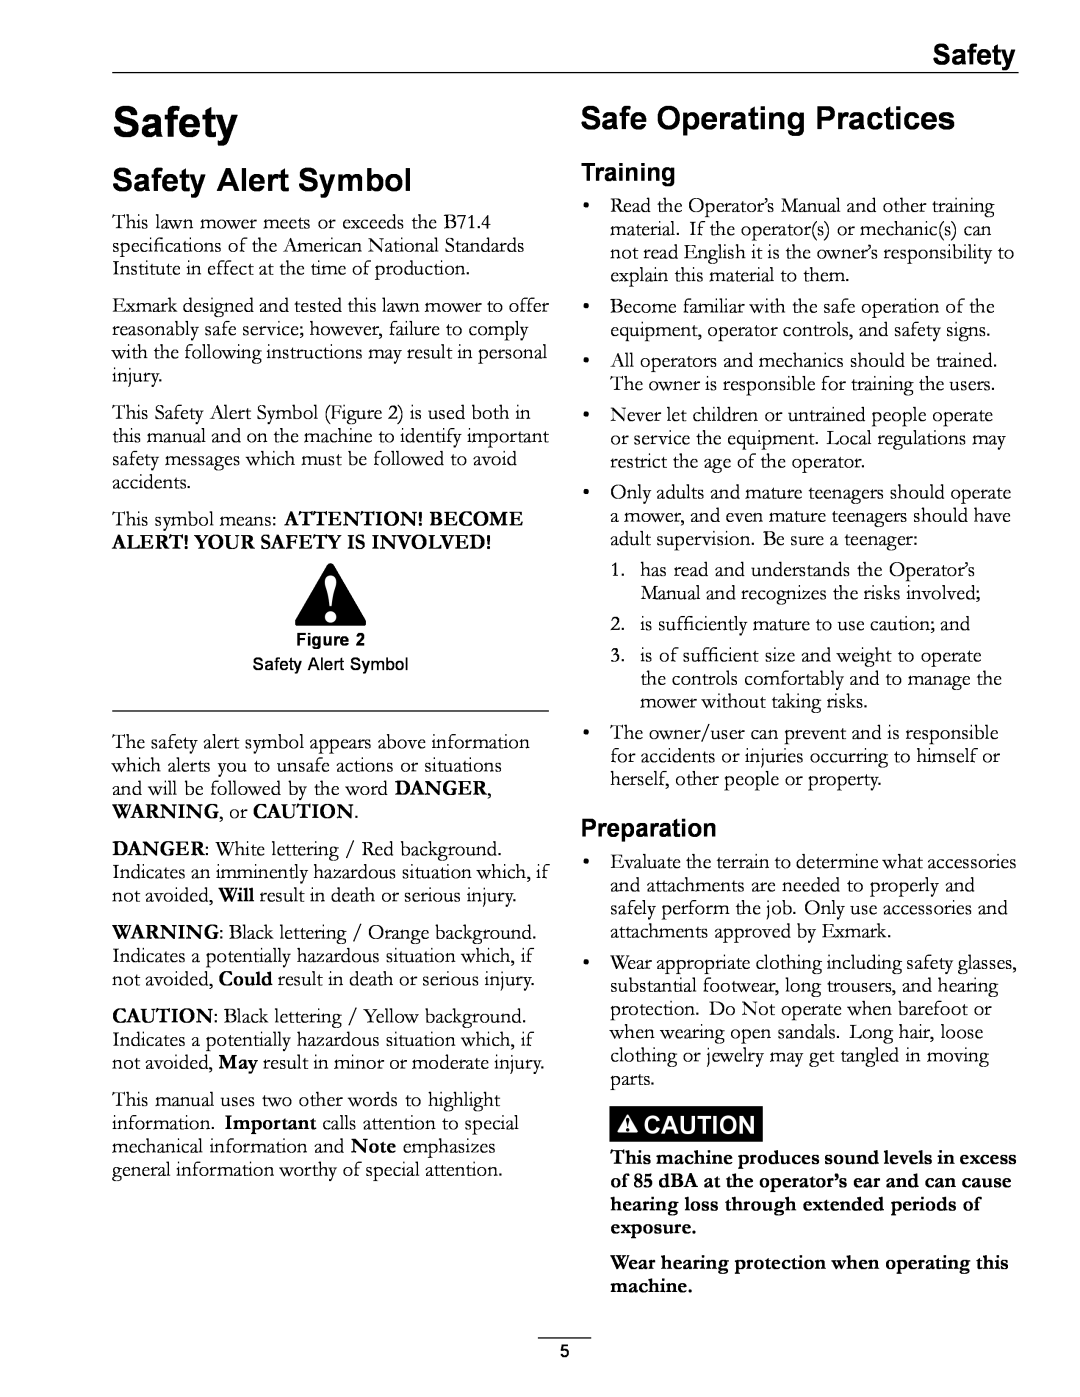 Exmark 920 Safety Alert Symbol, Safe Operating Practices, Training, Preparation, Alert! Your Safety Is Involved 